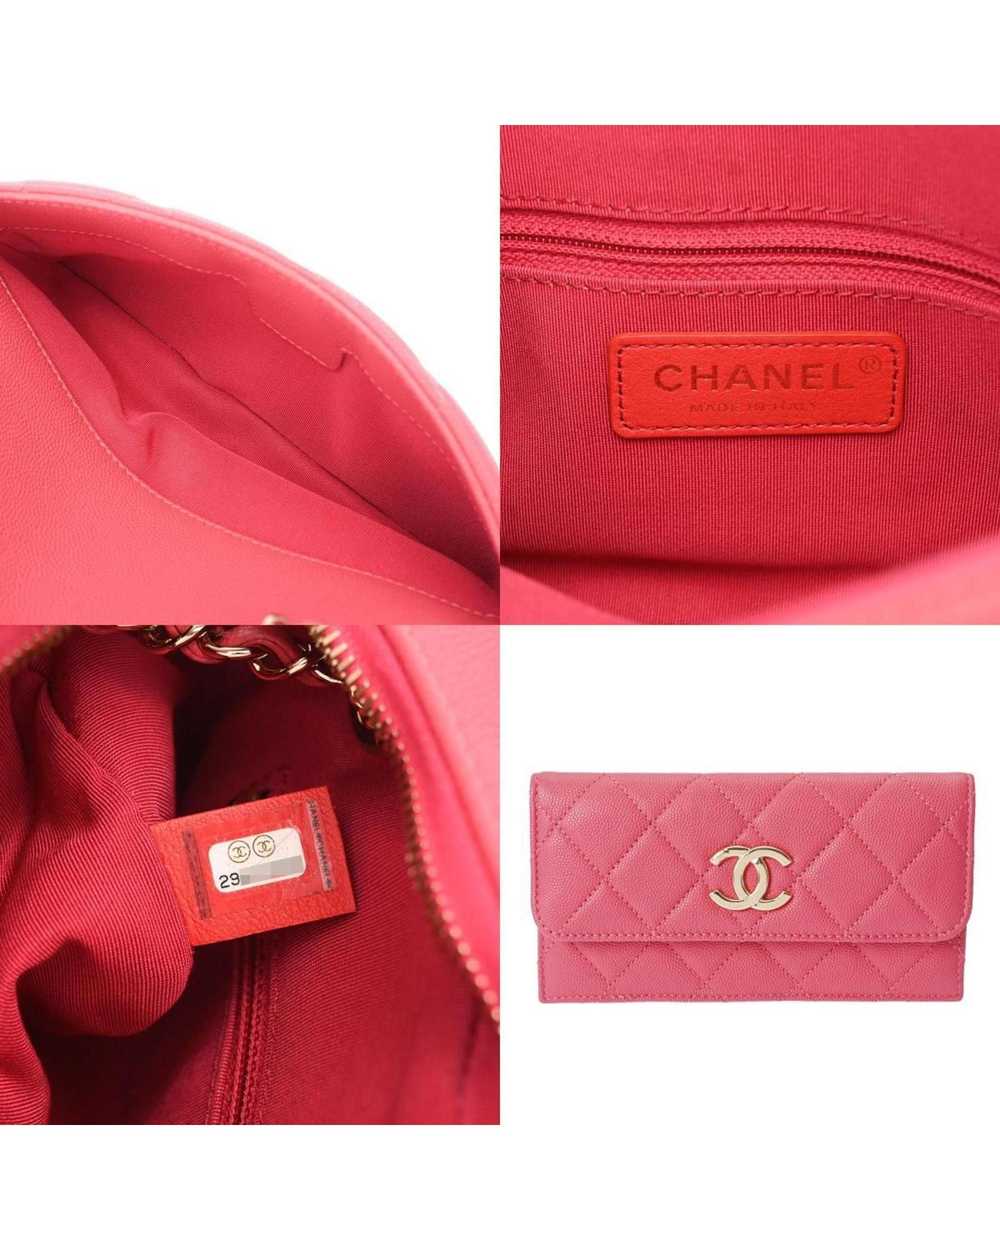 Chanel Champagne Gold Caviar Leather Shoulder Bag - image 10